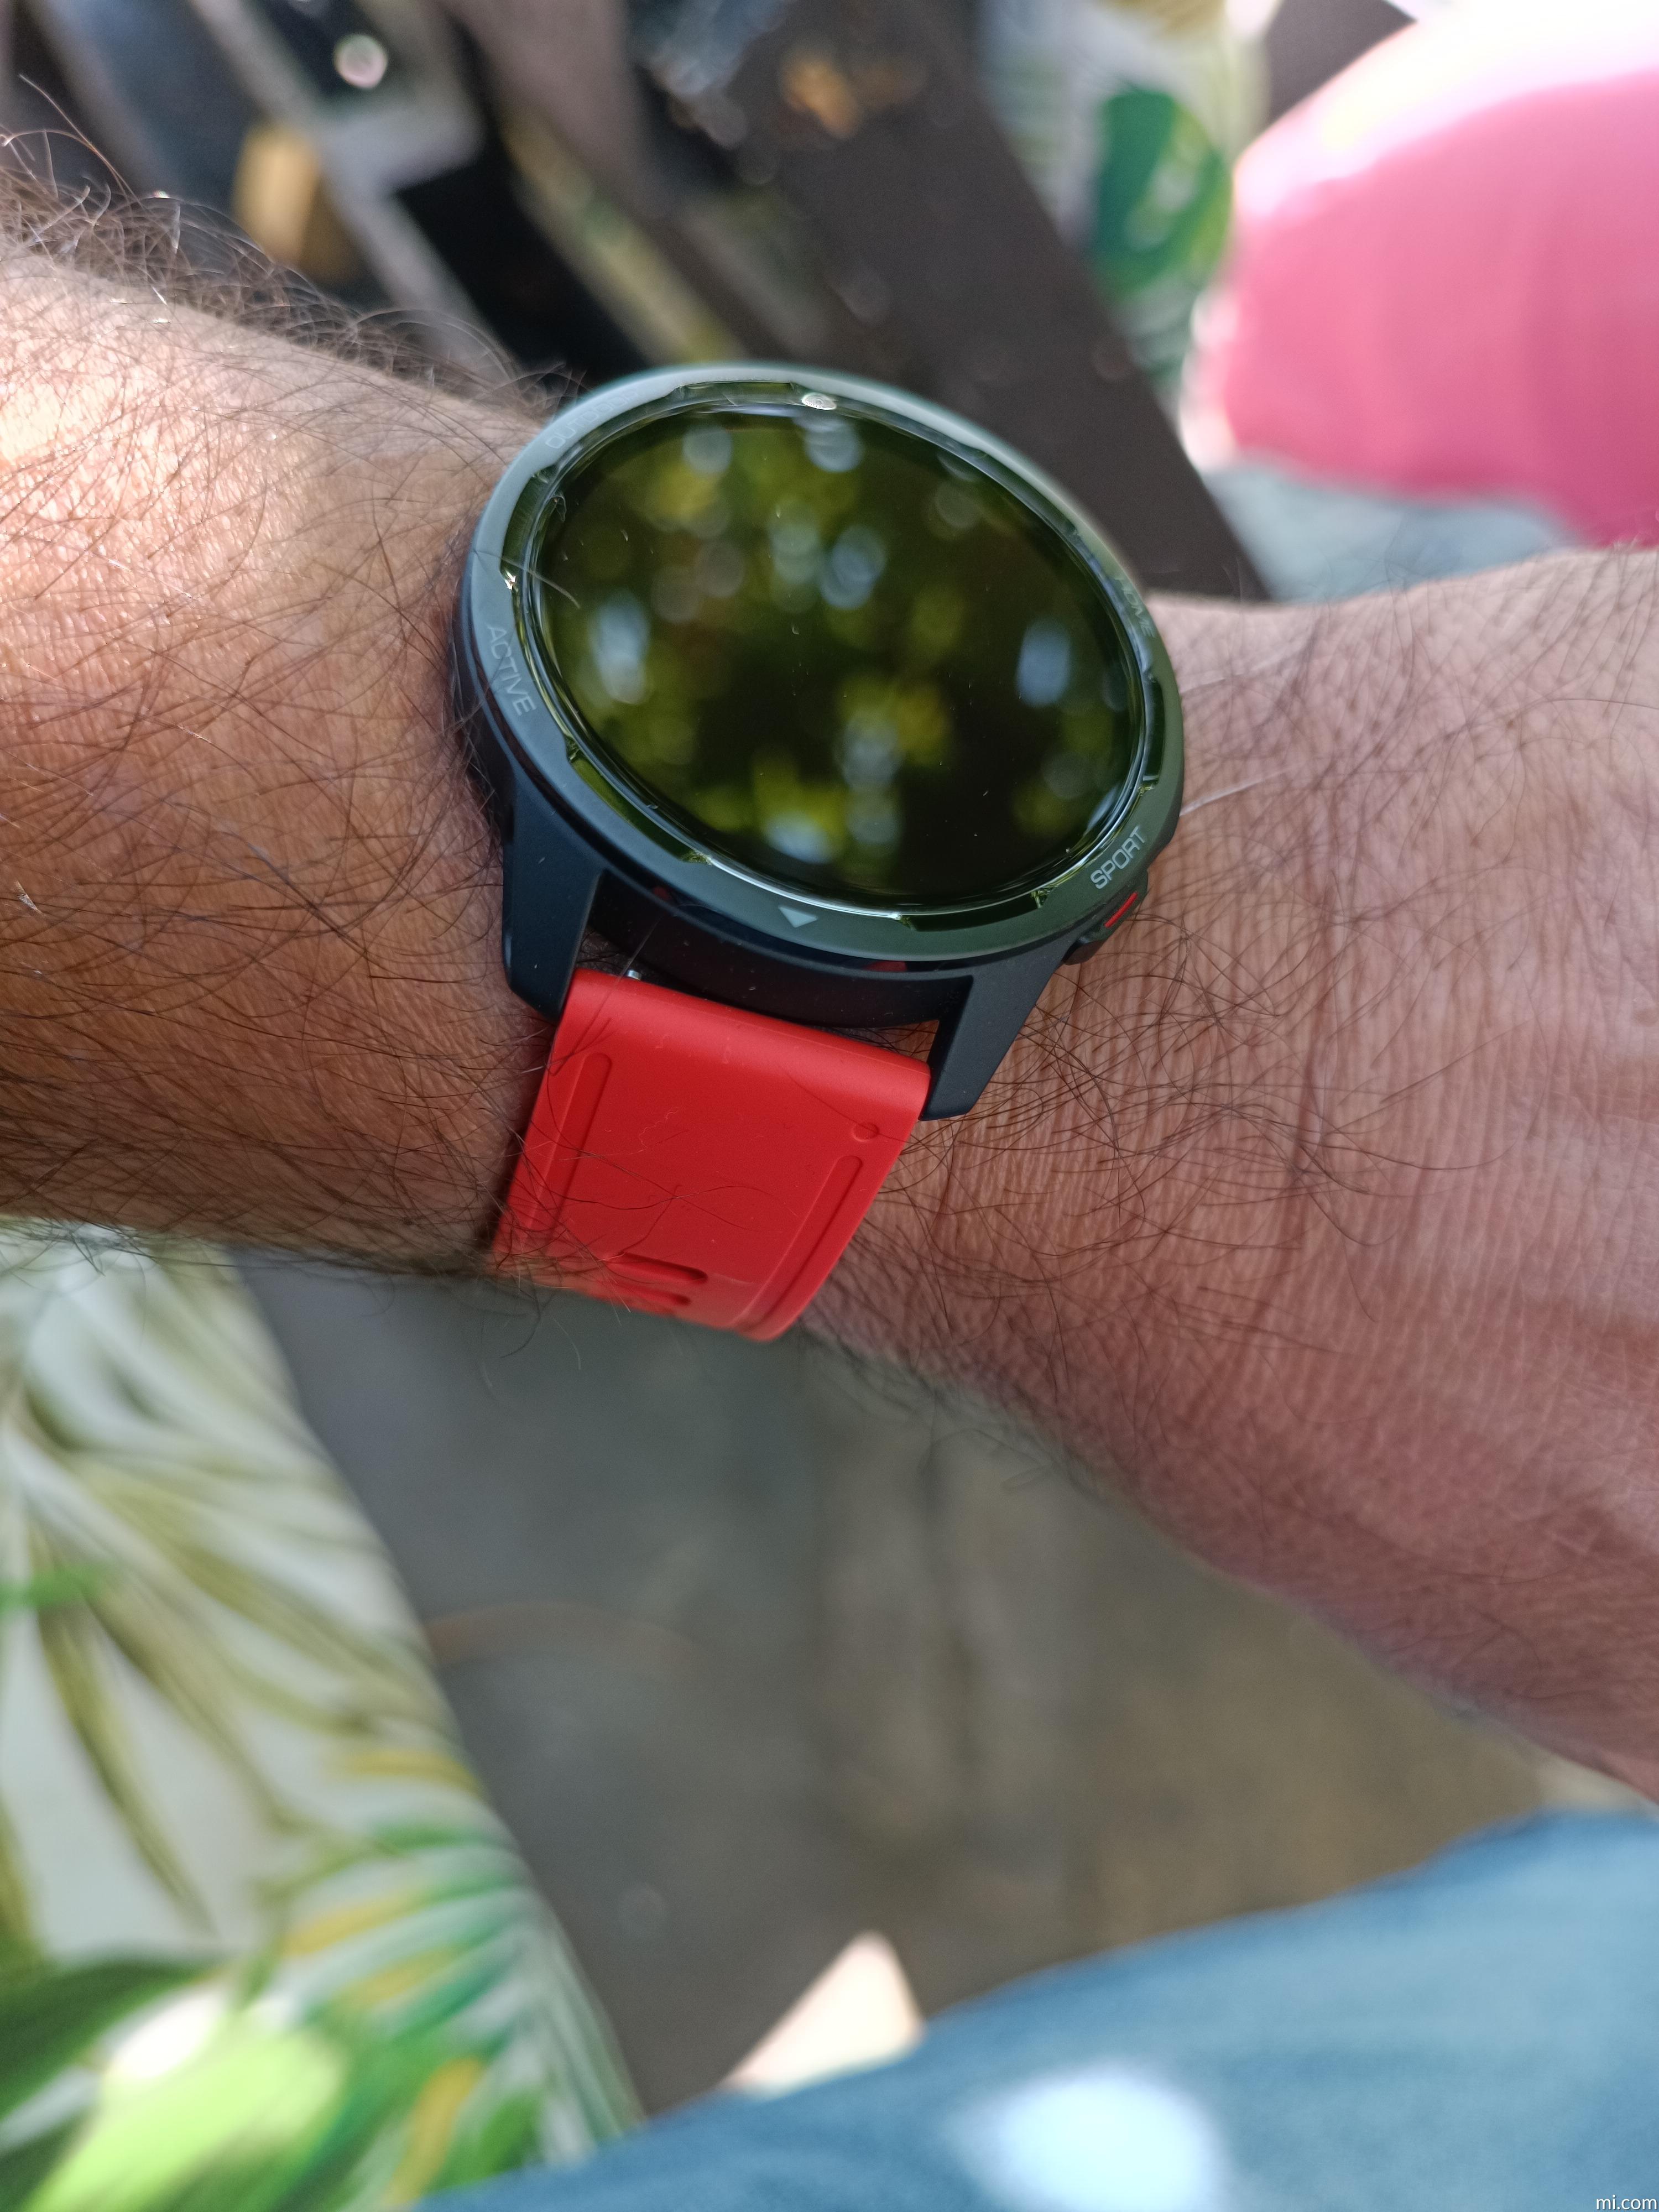 Correa de Silicona Original para Xiaomi Watch S1 Active Amarillo